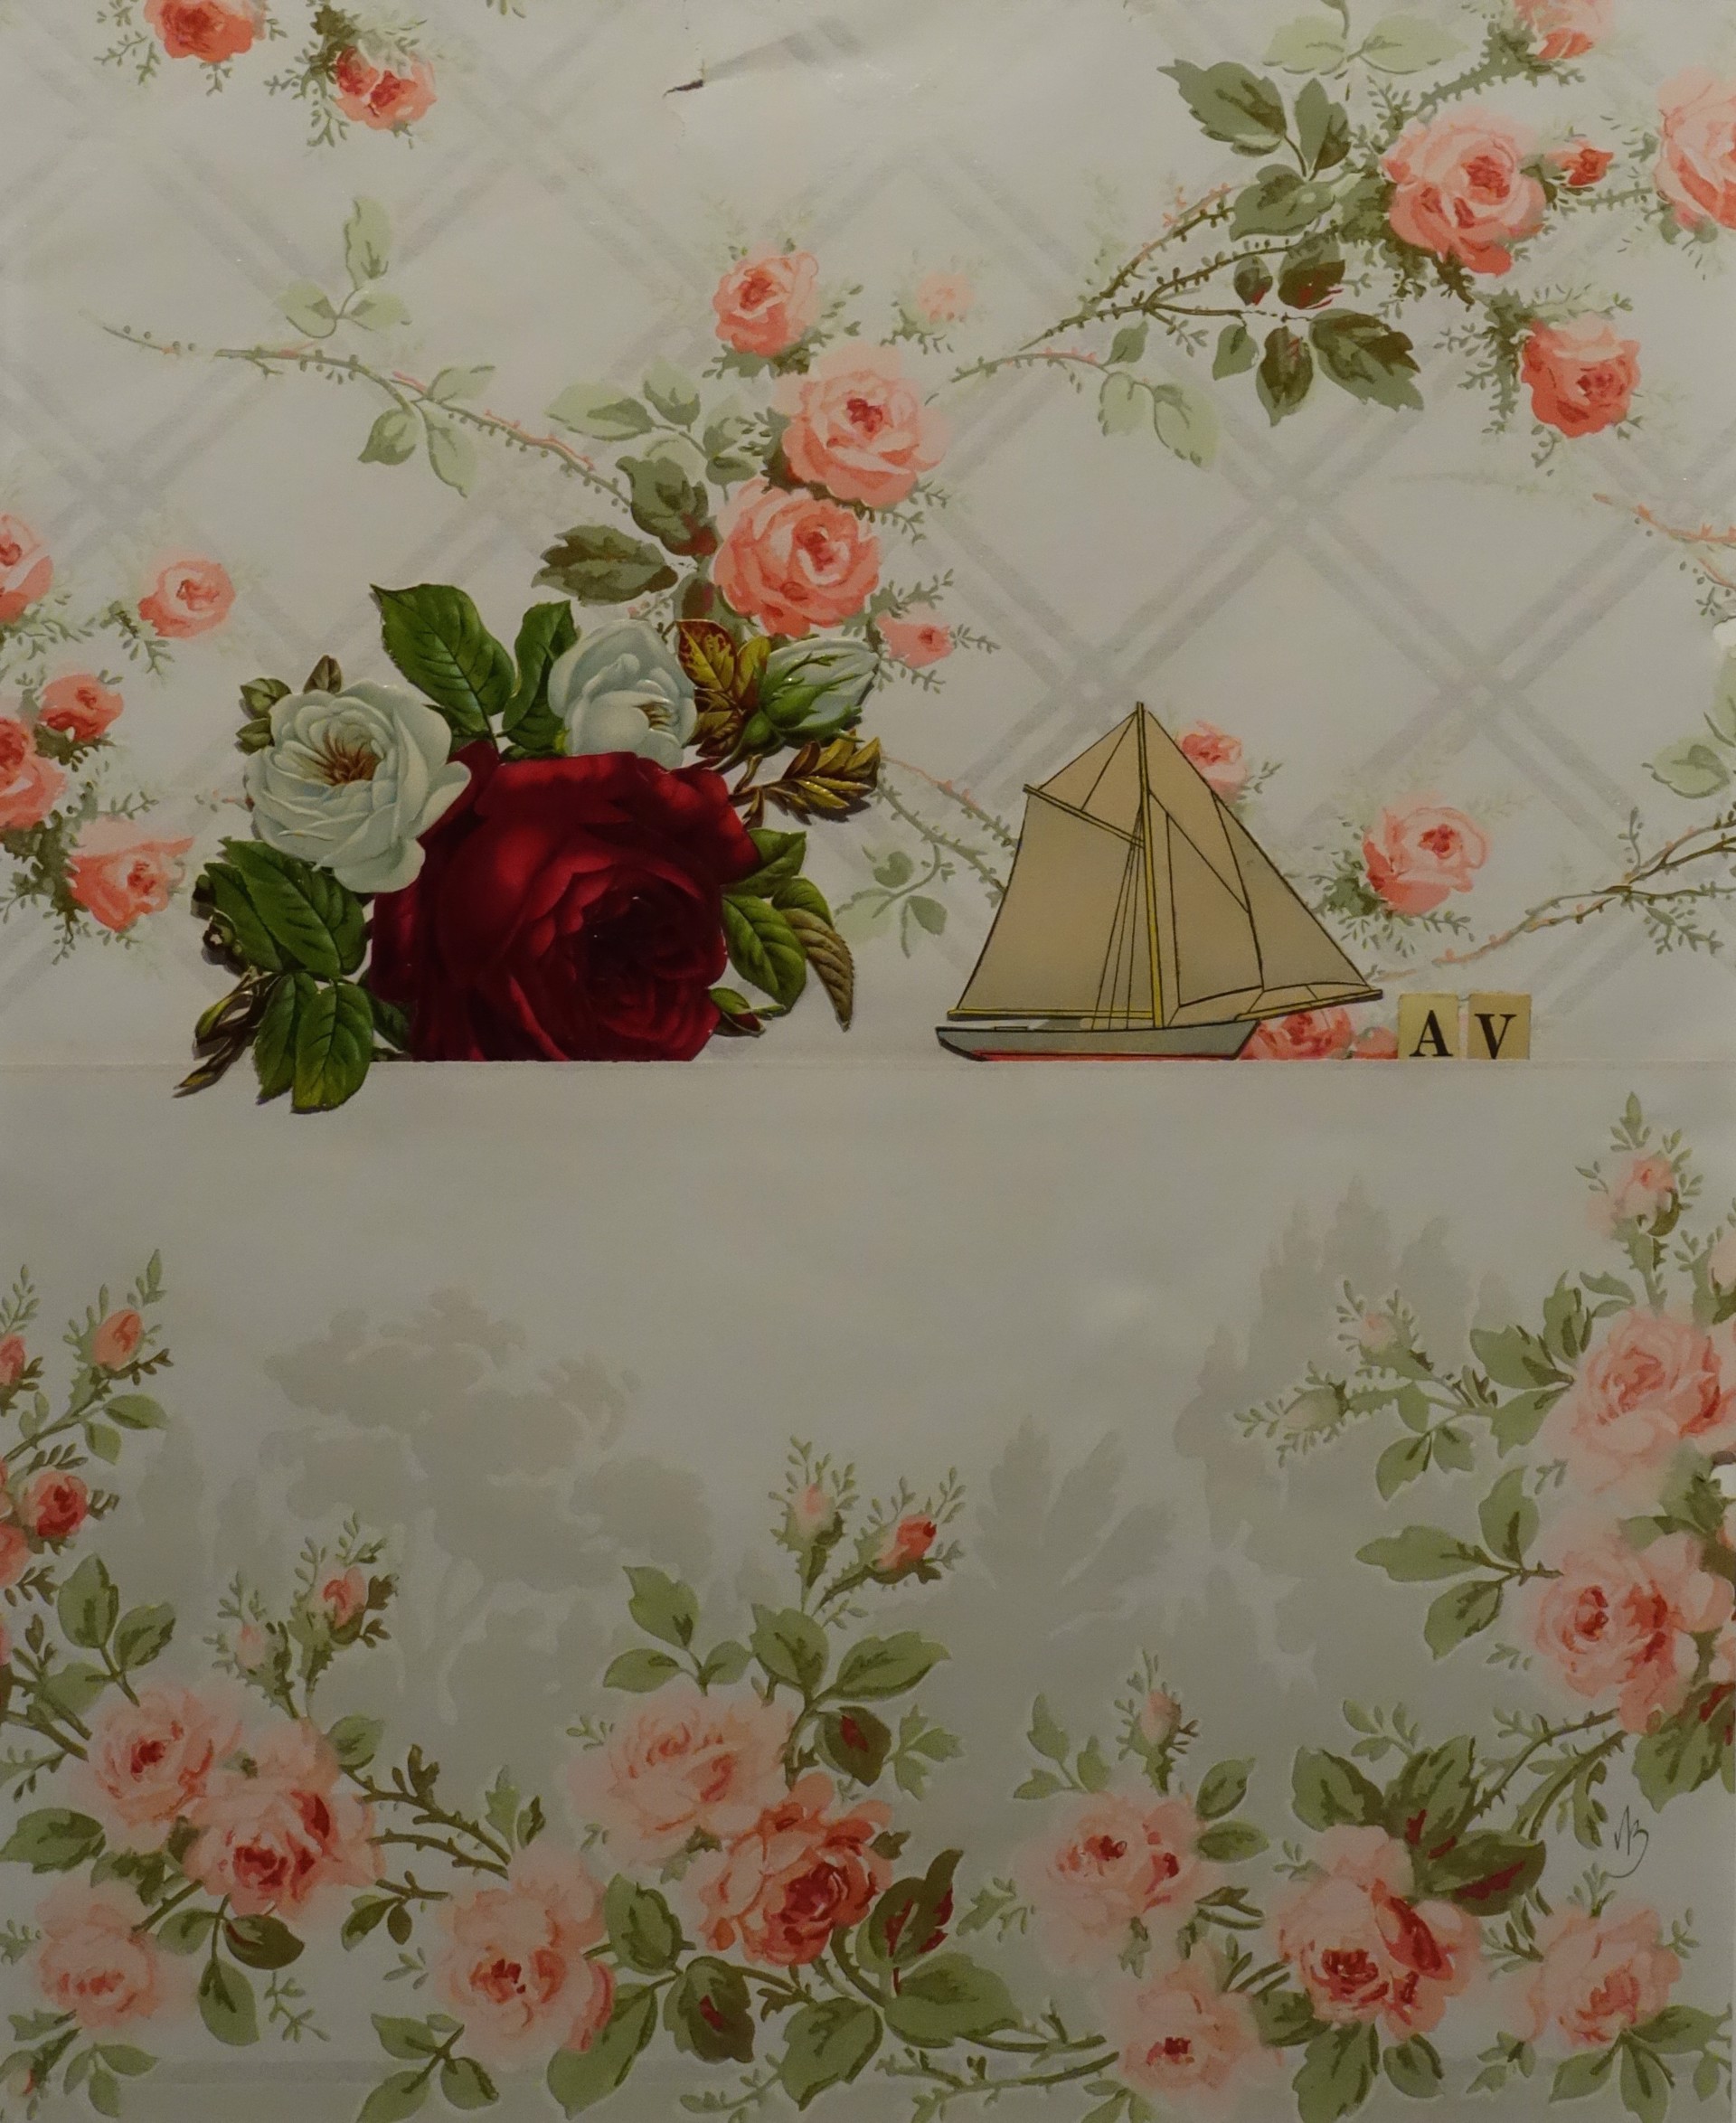 Rose Sail A V by Varujan Boghosian